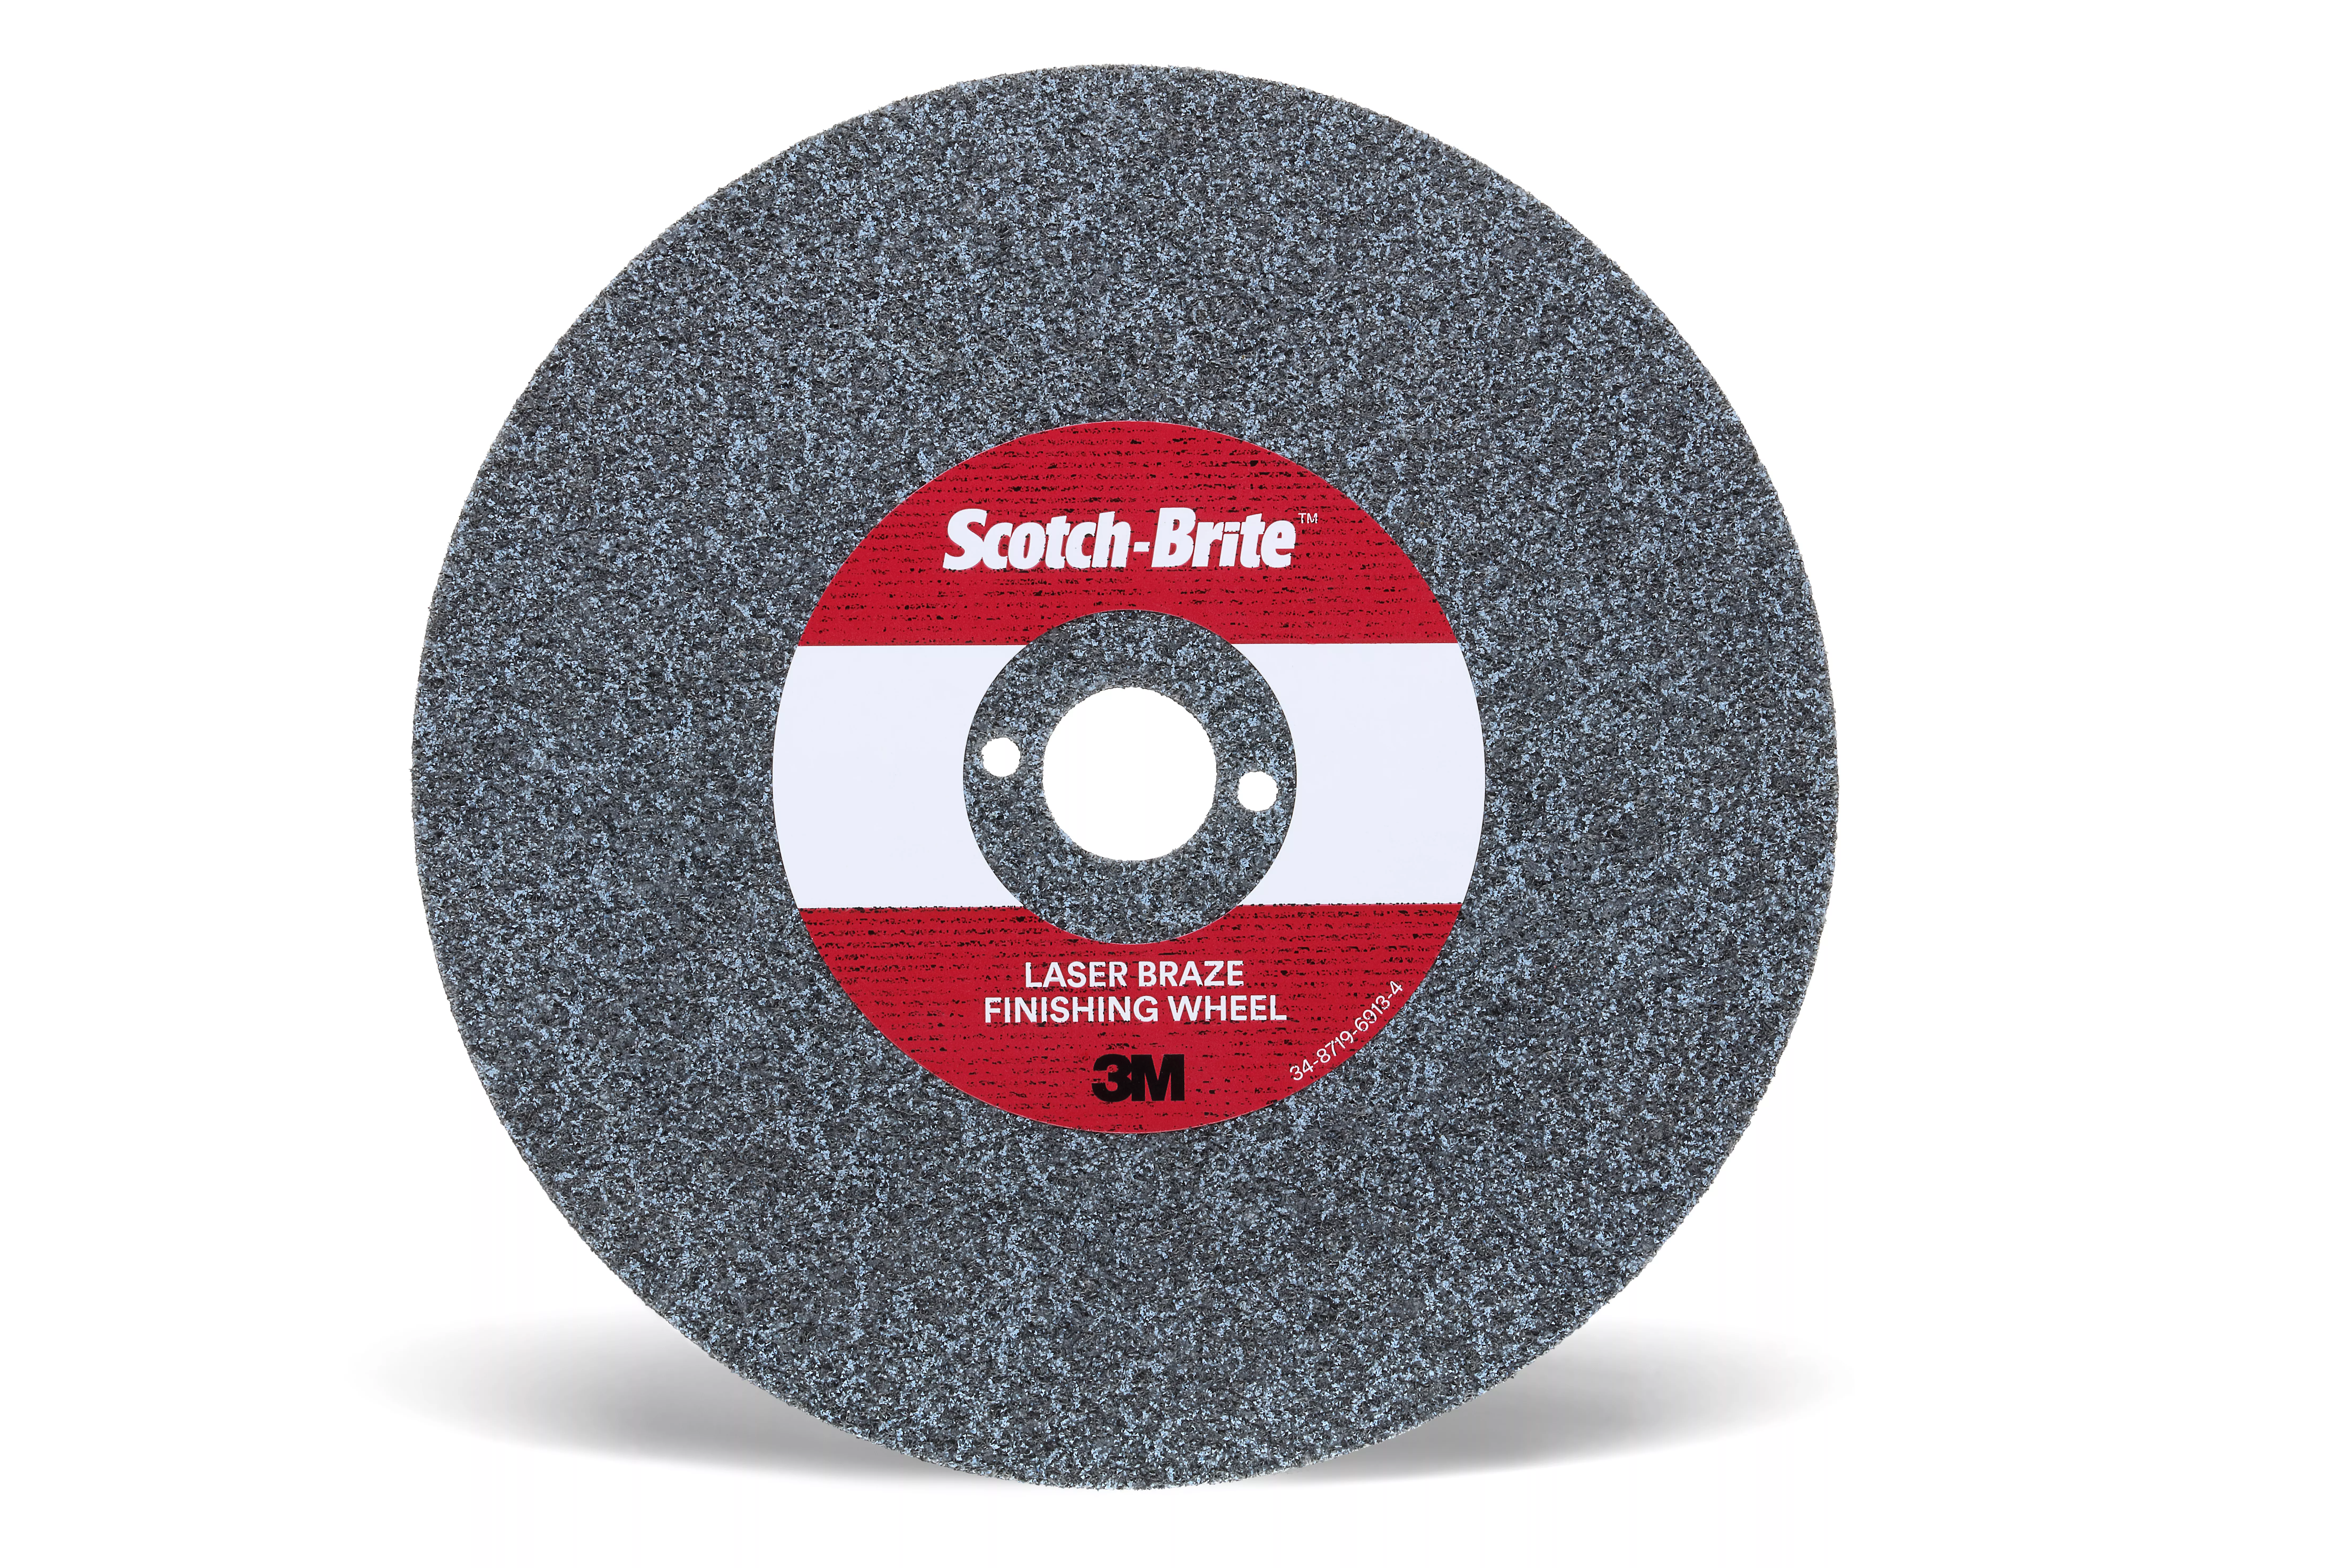 SKU 7100117421 | Scotch-Brite™ Laser Braze Finishing Wheel